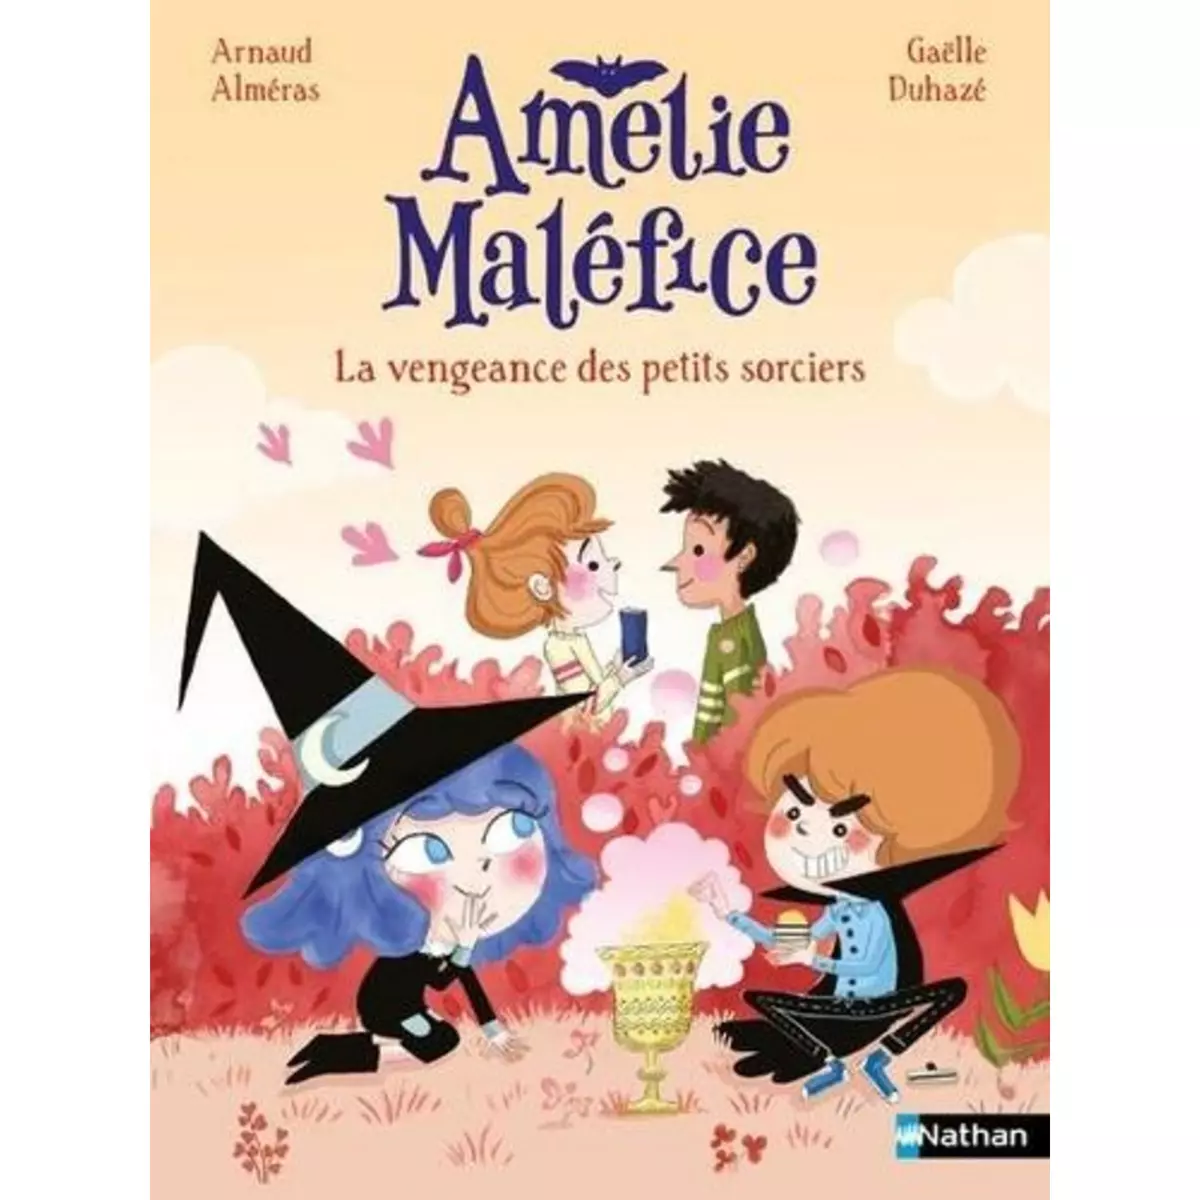  AMELIE MALEFICE : LA VENGEANCE DES PETITS SORCIERS, Alméras Arnaud